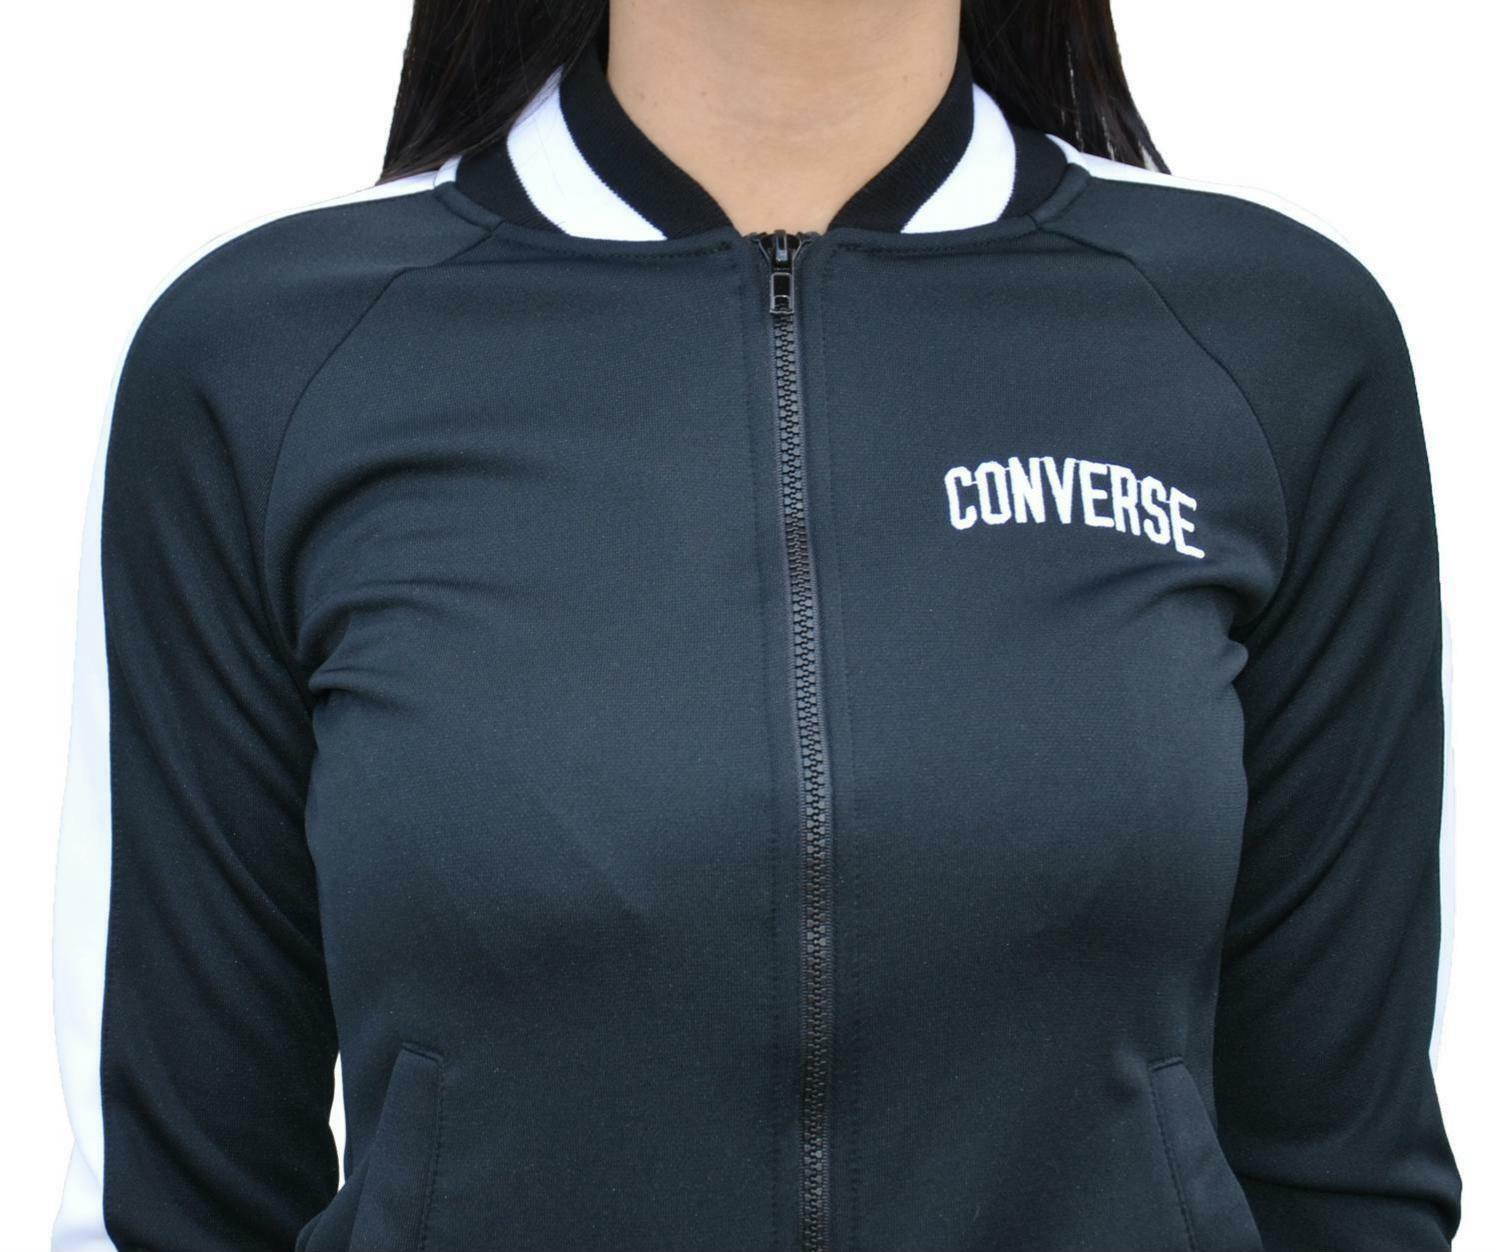 converse converse giacchetto donna nero 7402a01